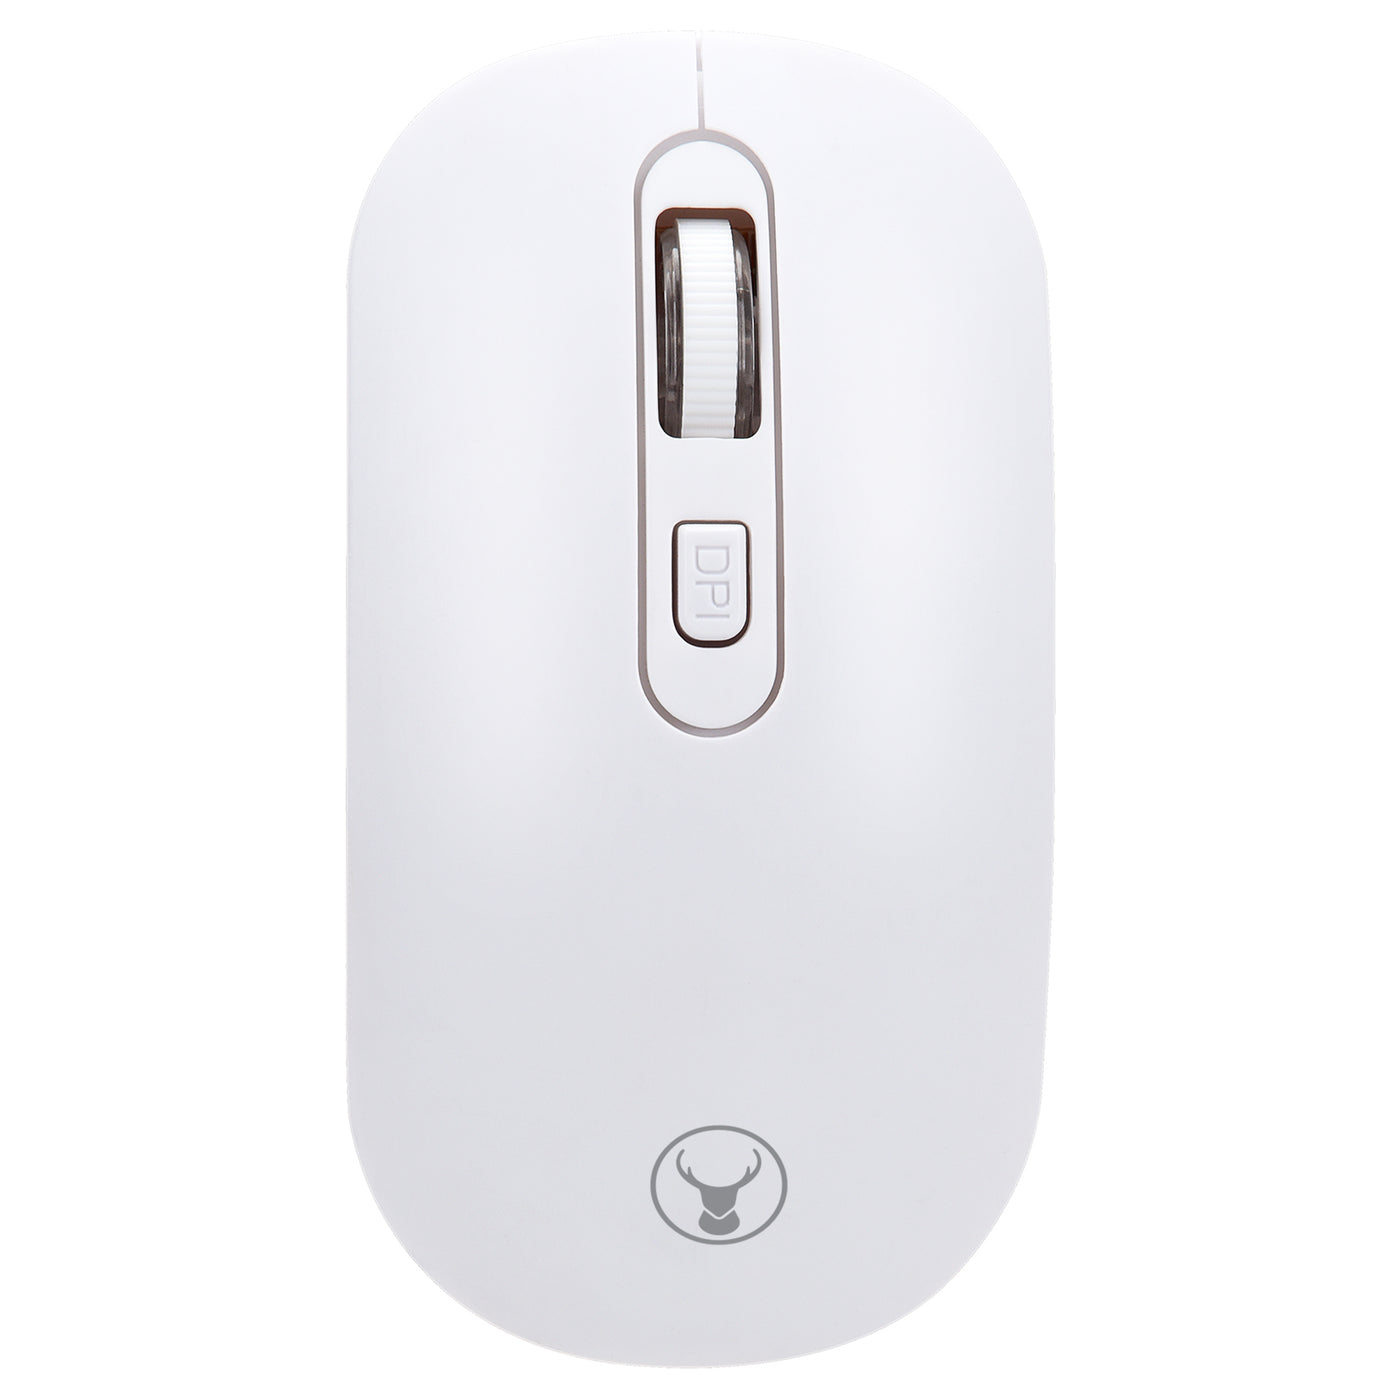 Bonelk Slim Wireless Keyboard and Mouse Combo, KM-322 - White